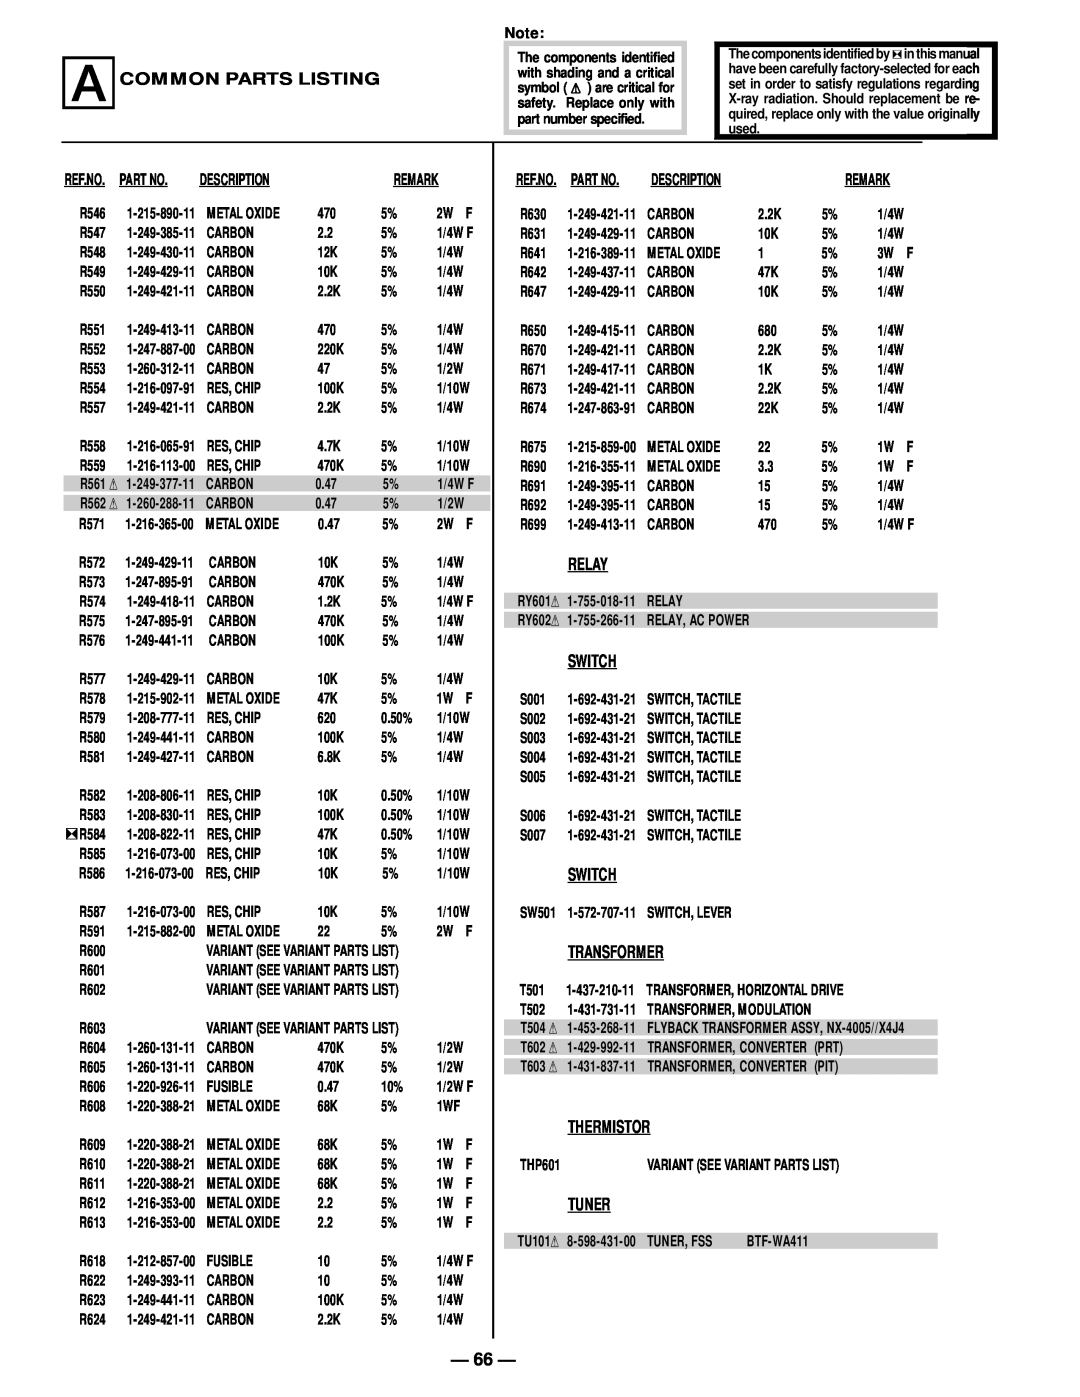 Sony KV-29SL45 Acommon Parts Listing, Relay, Switch, Transformer, Thermistor, Tuner, Remark, R571, R572, R573, R575, R576 